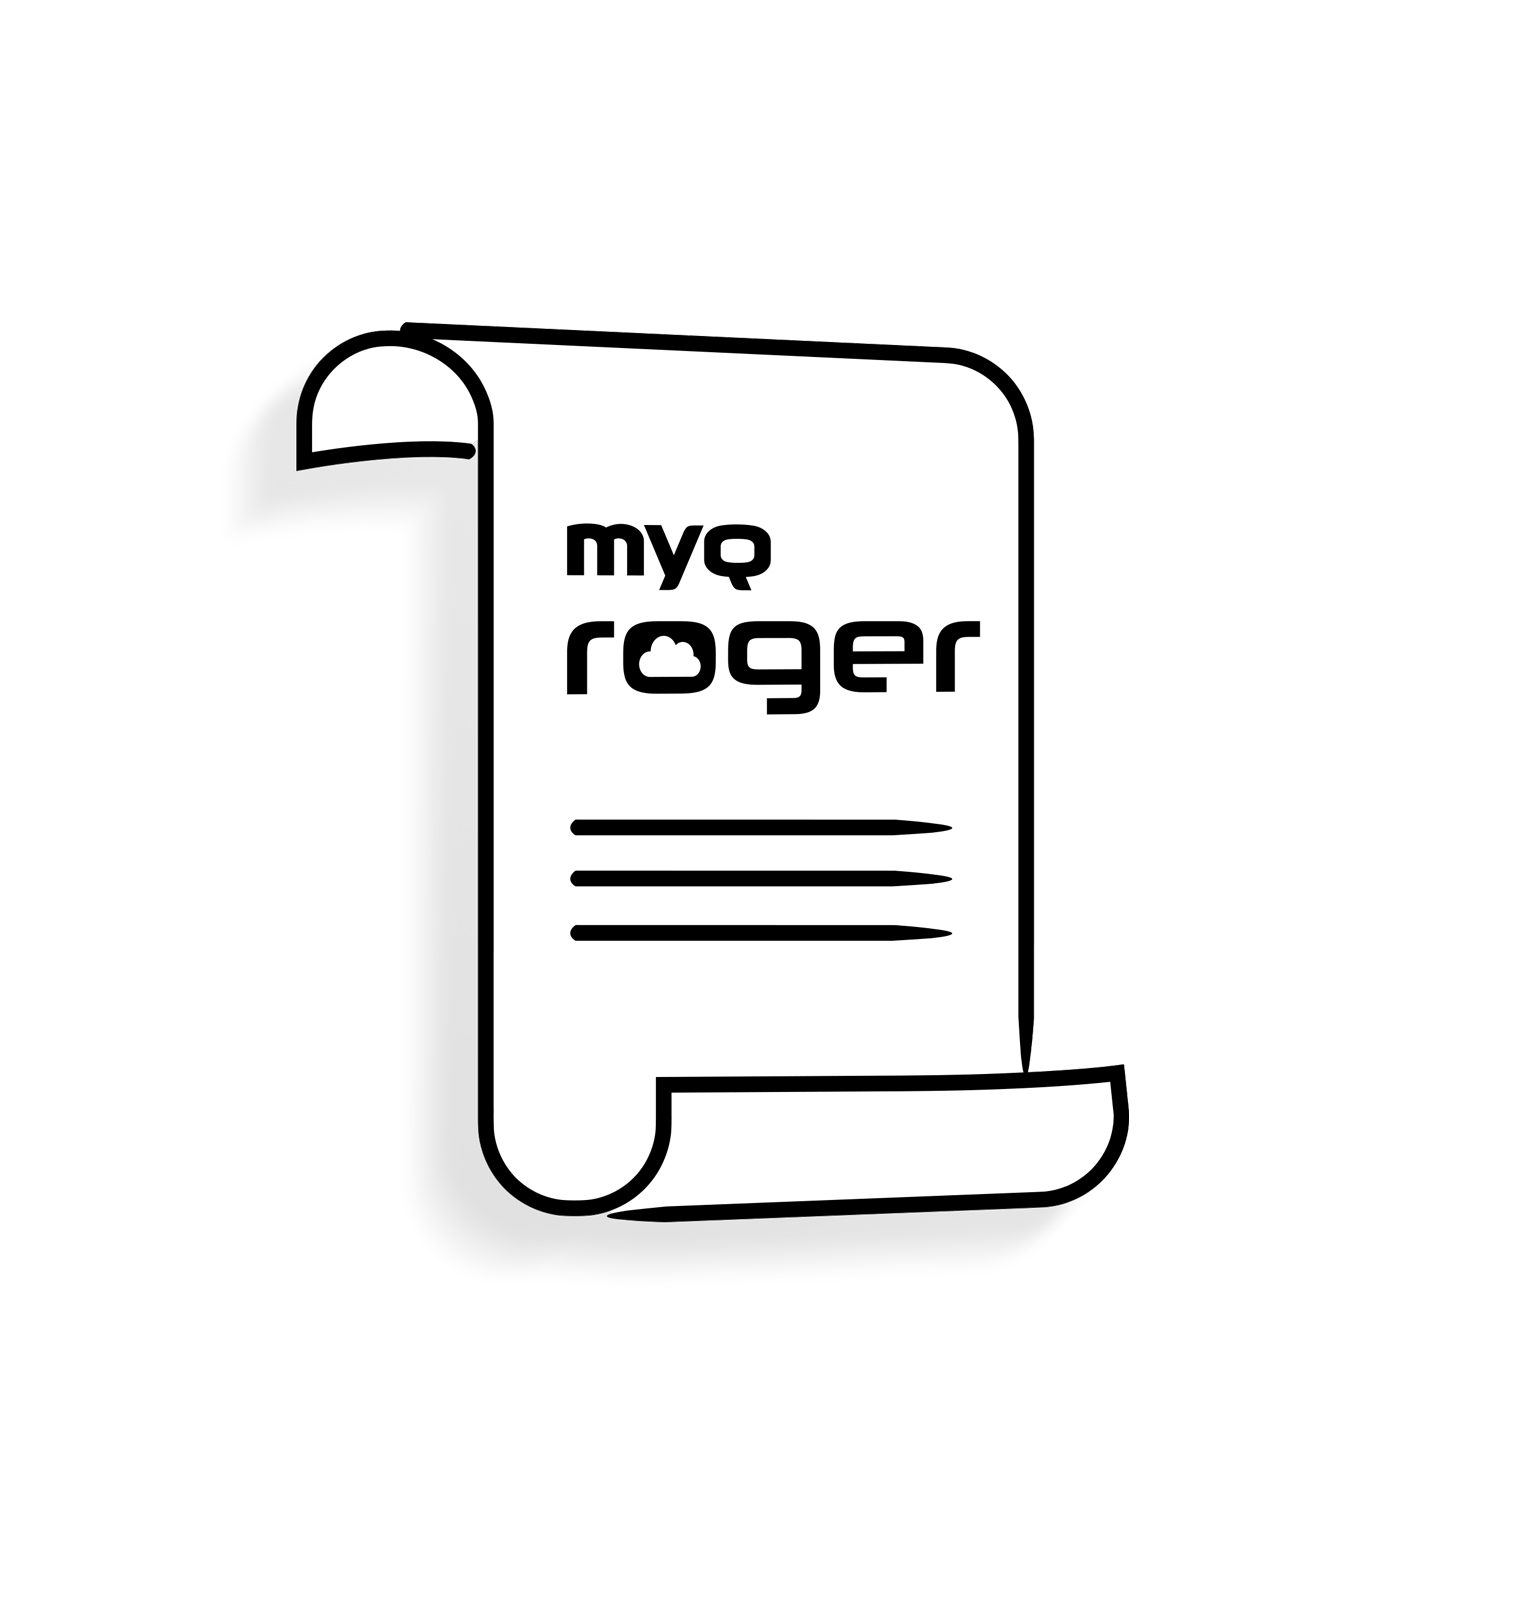 Documentos relacionados con MyQ Roger